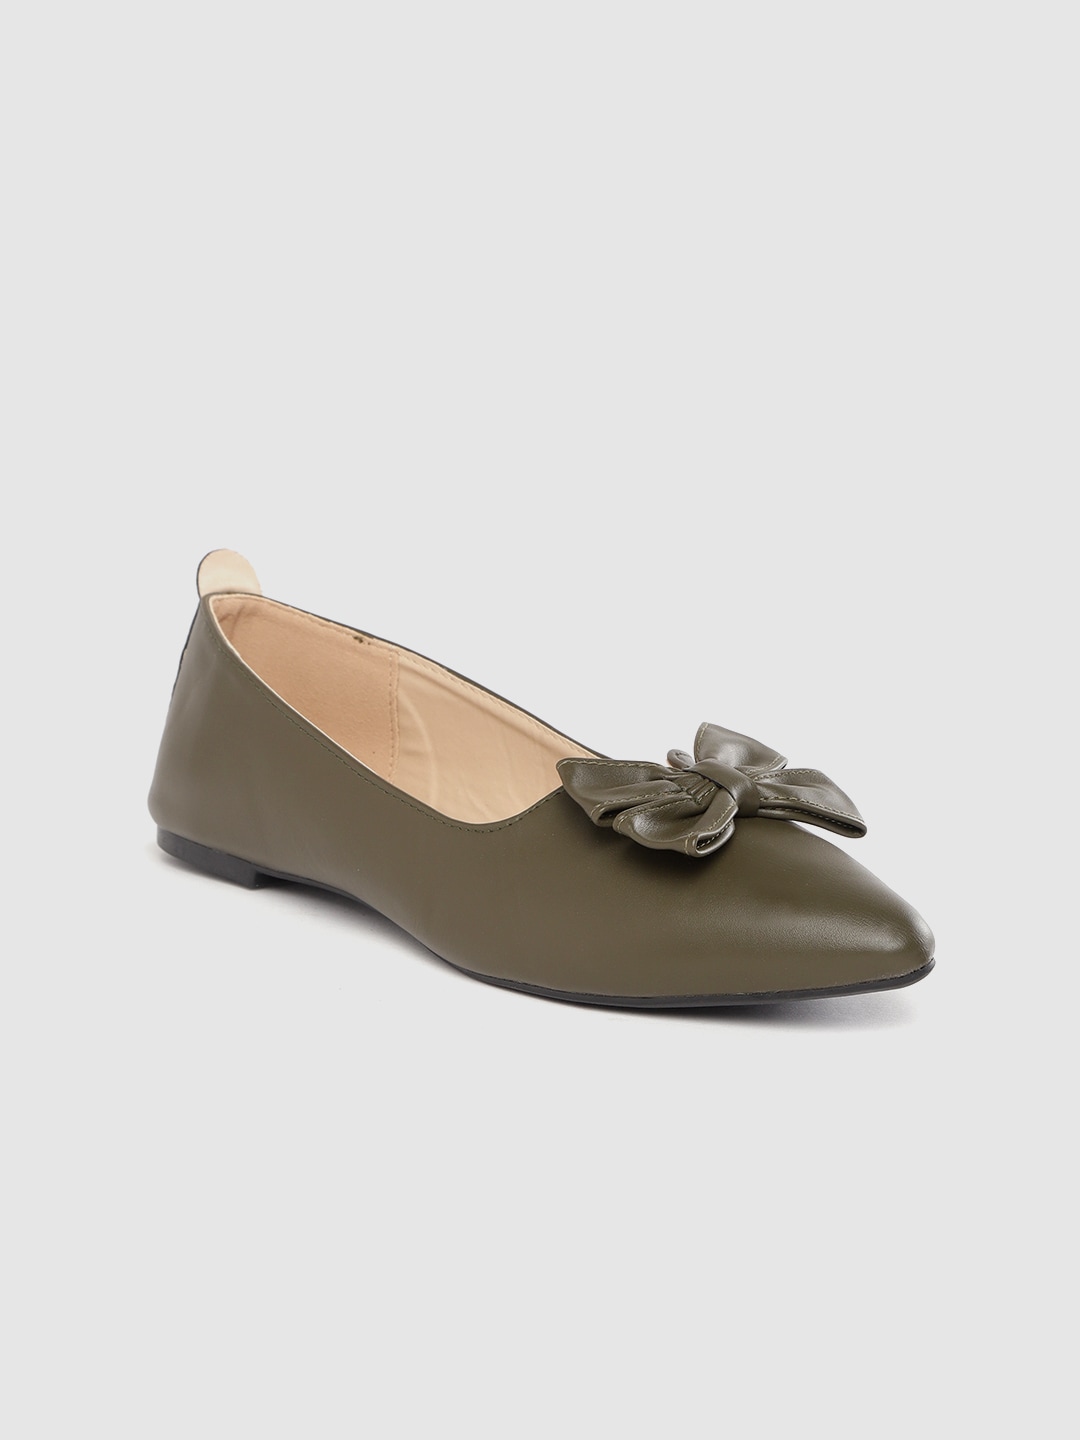 Van Heusen Woman’S Footwear Start form Rs. 299